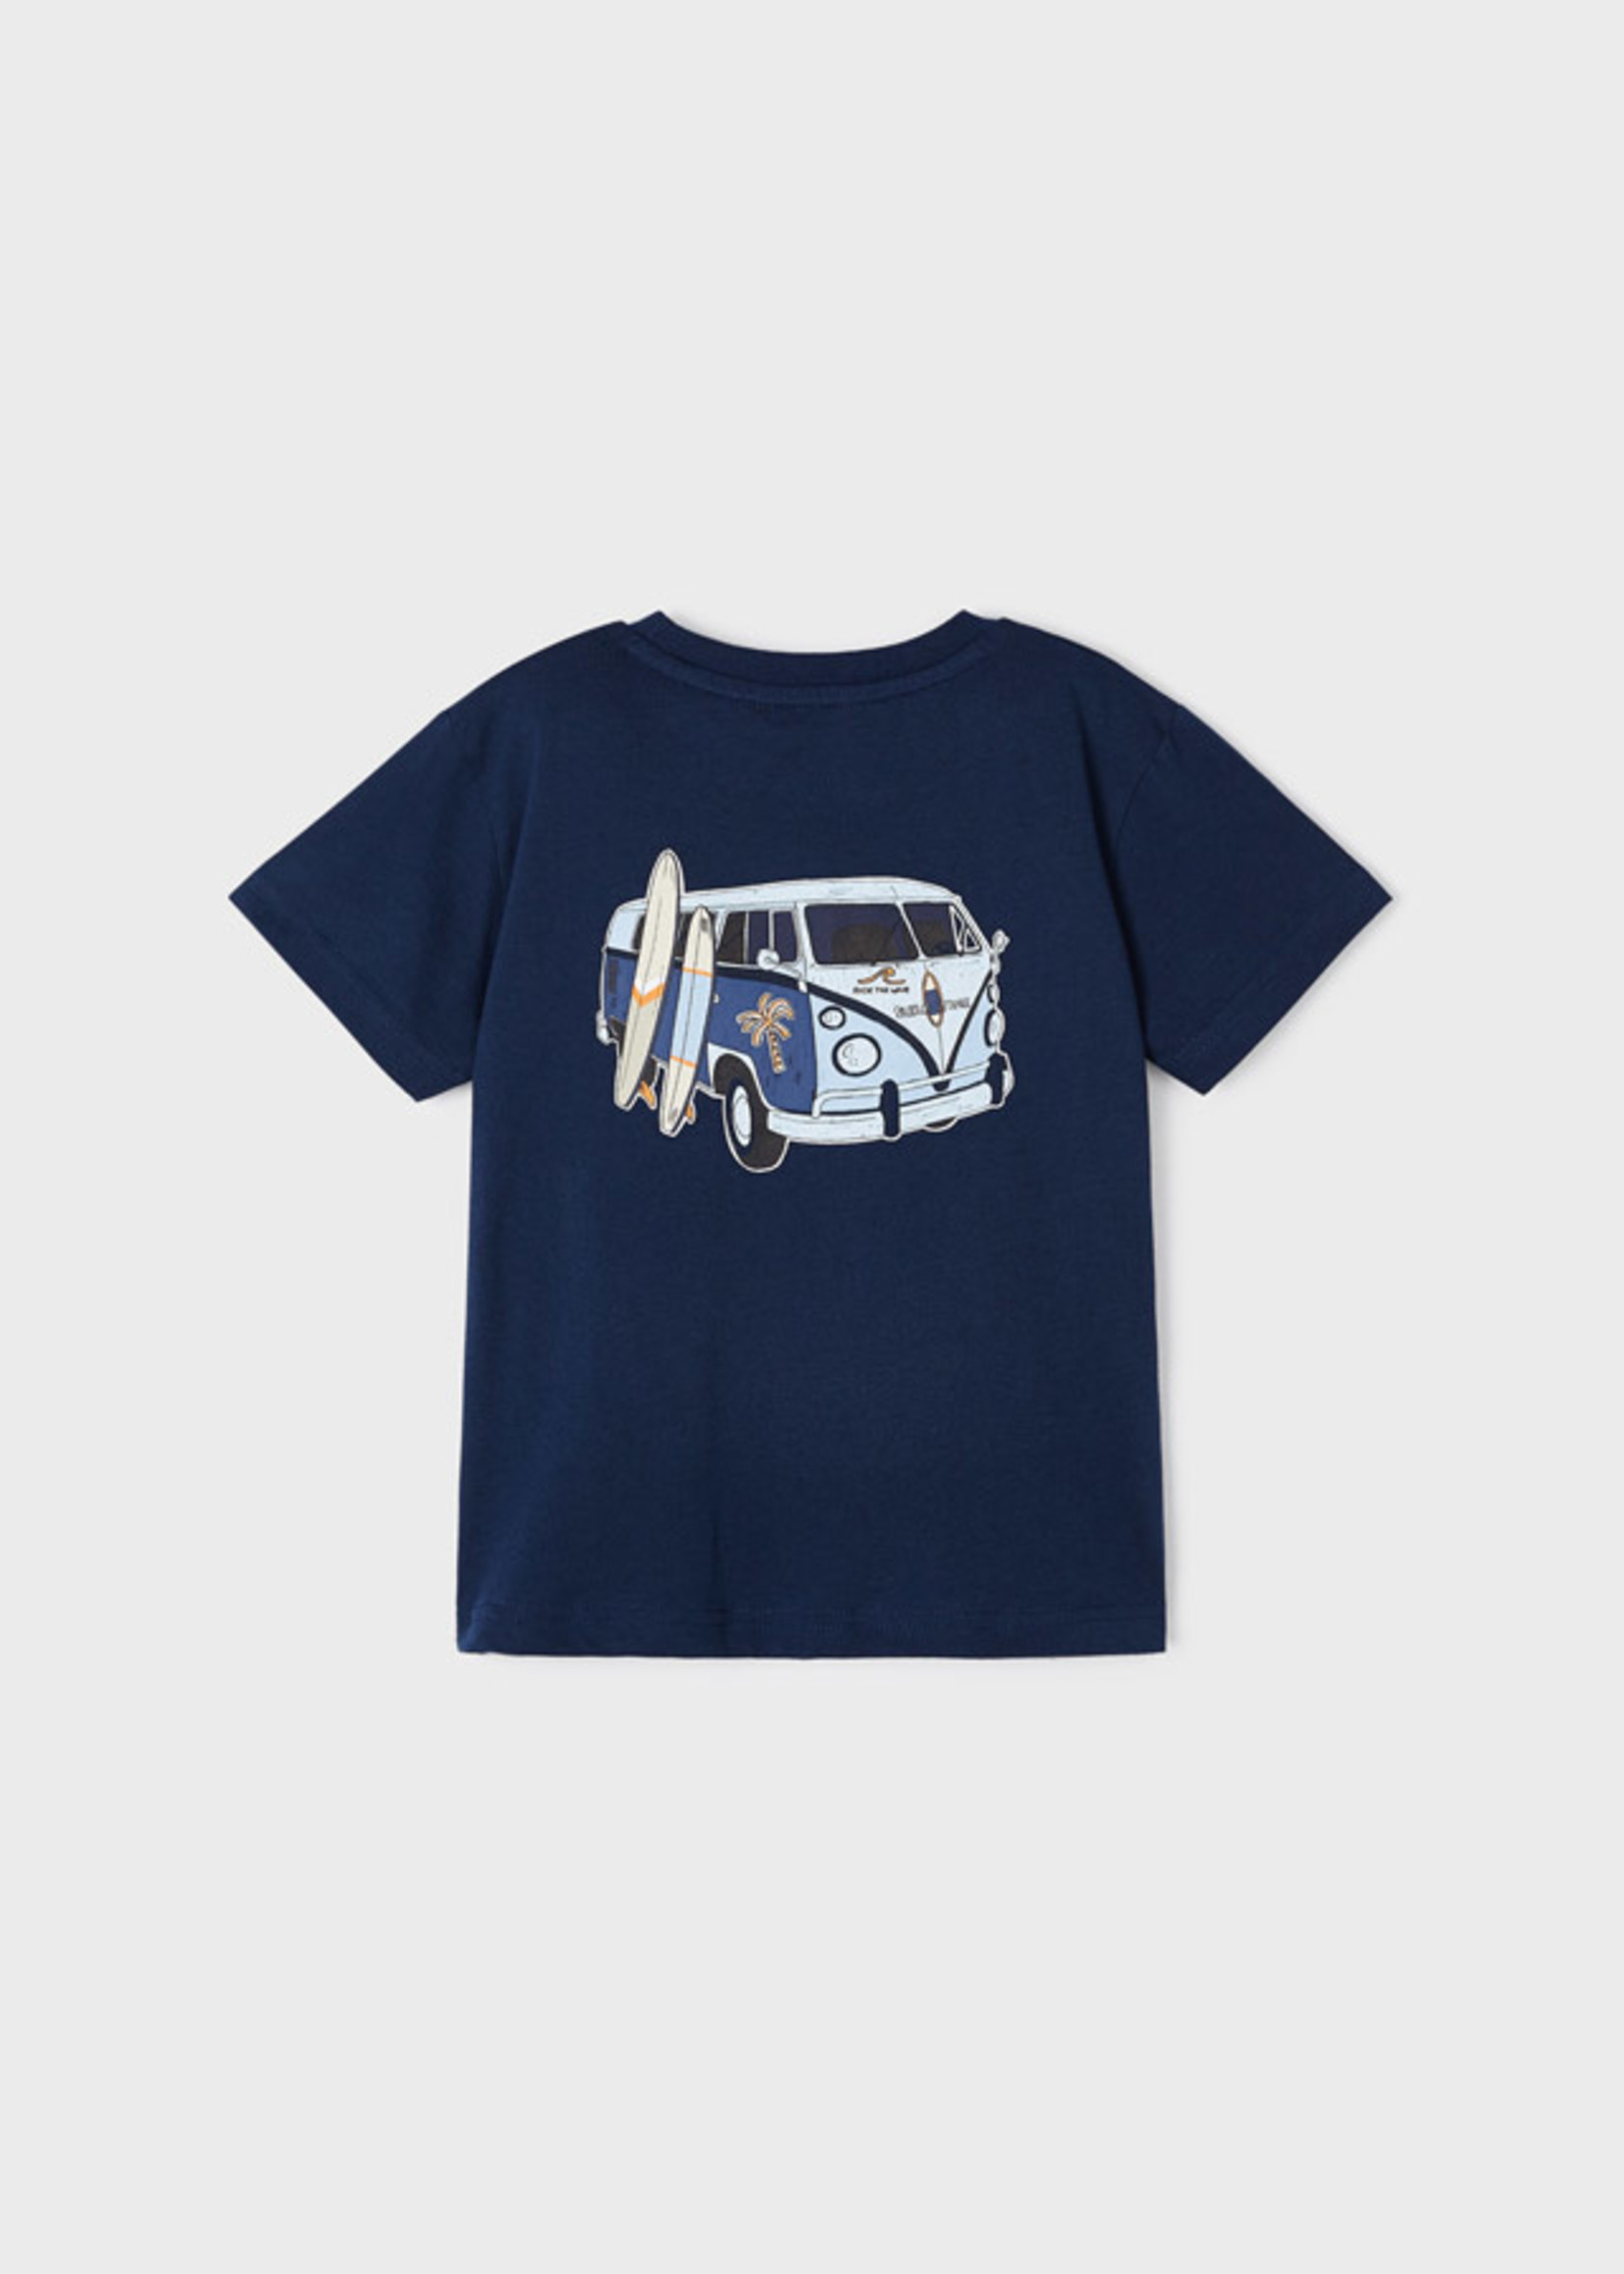 Mayoral 705 Mini Boy             S/s t-shirt                   Blue I